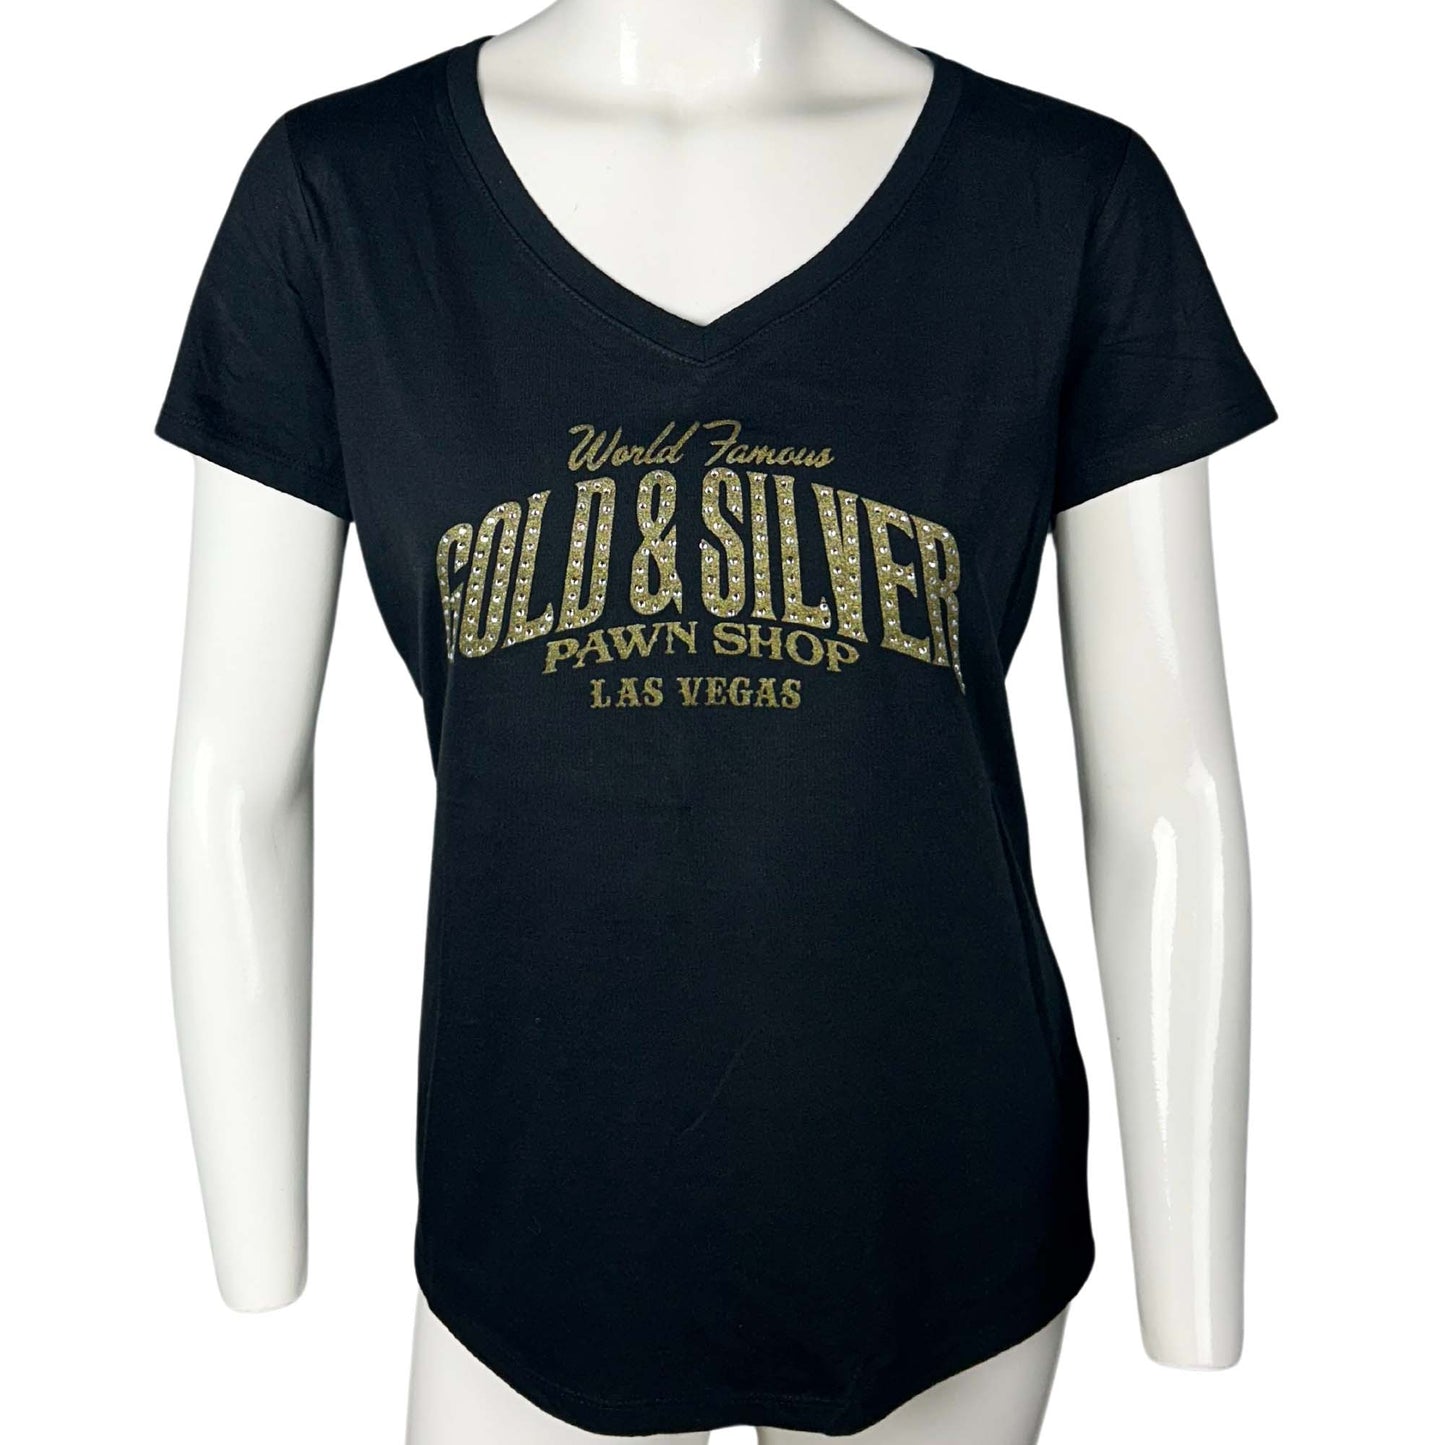 Gold & Silver Pawn Shop Ladies Rhinestone T-Shirt Front